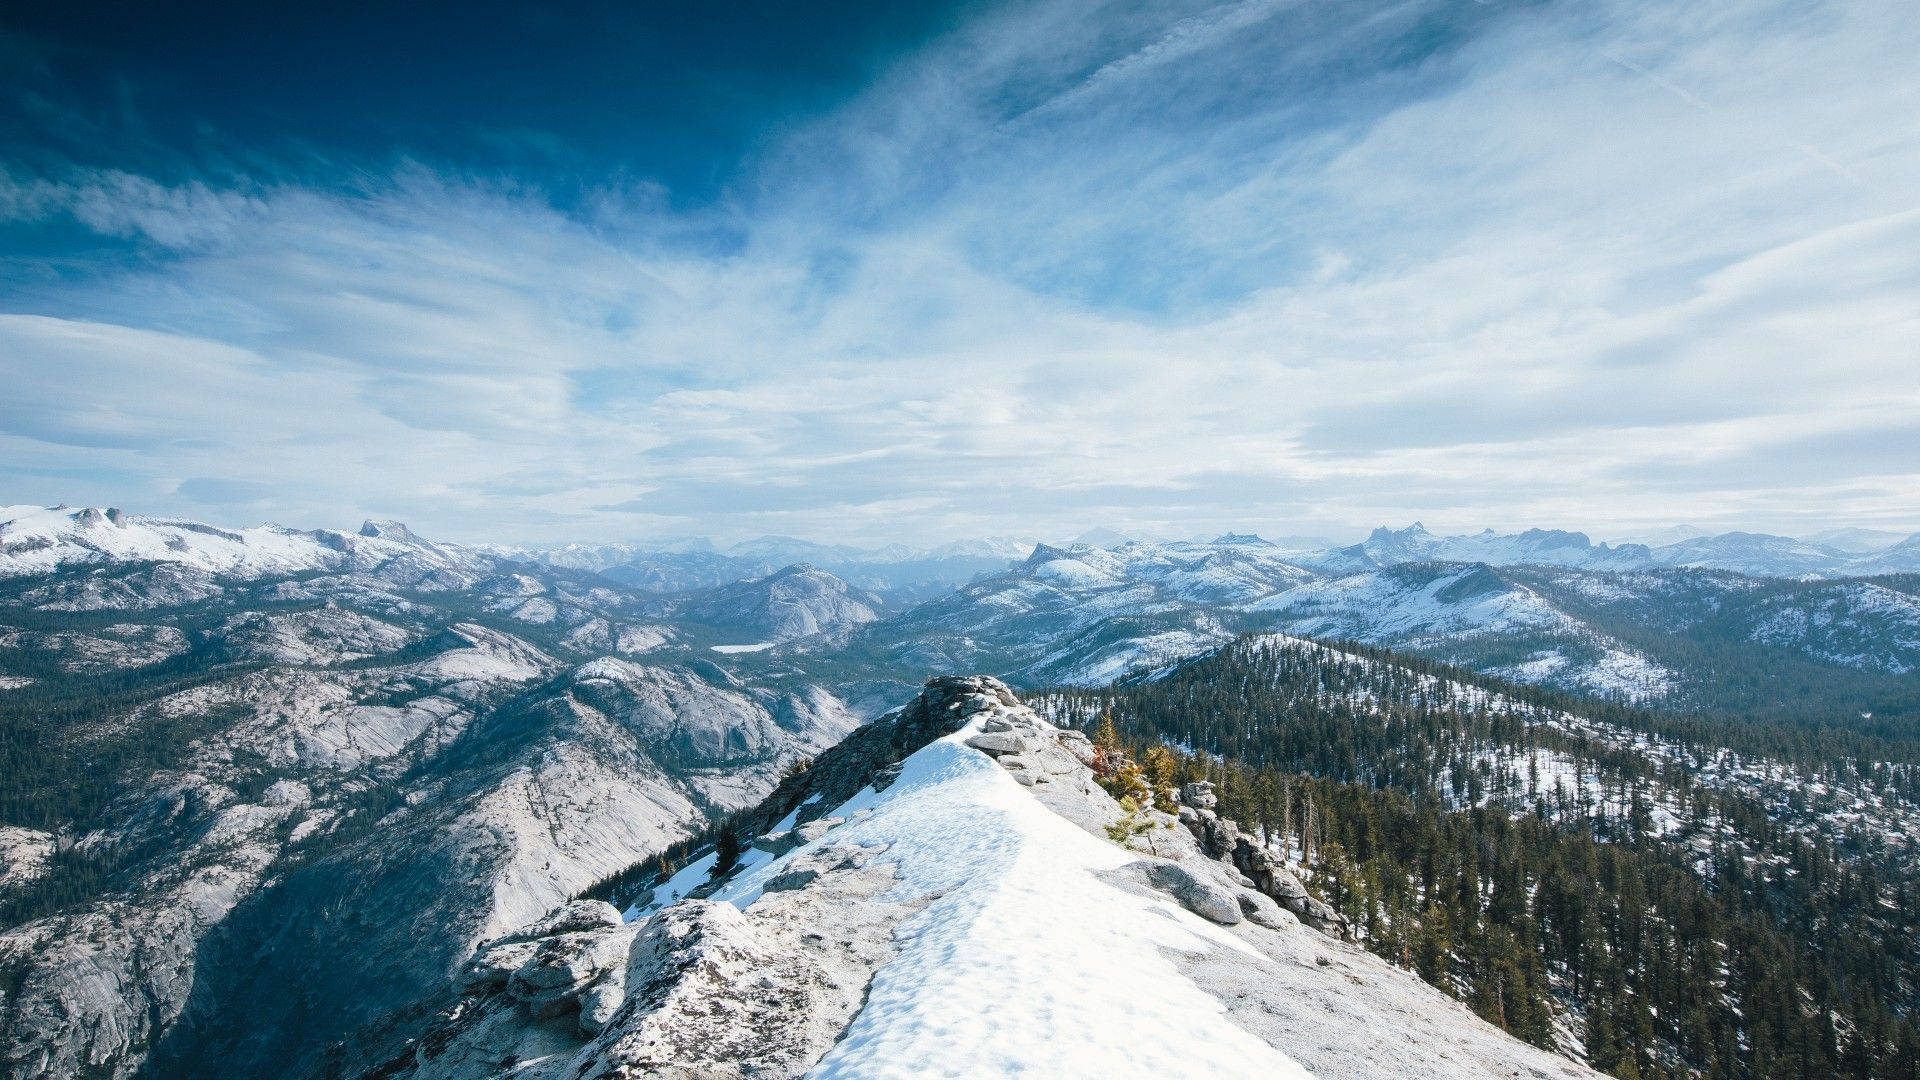 Snowy Yosemite Mountain